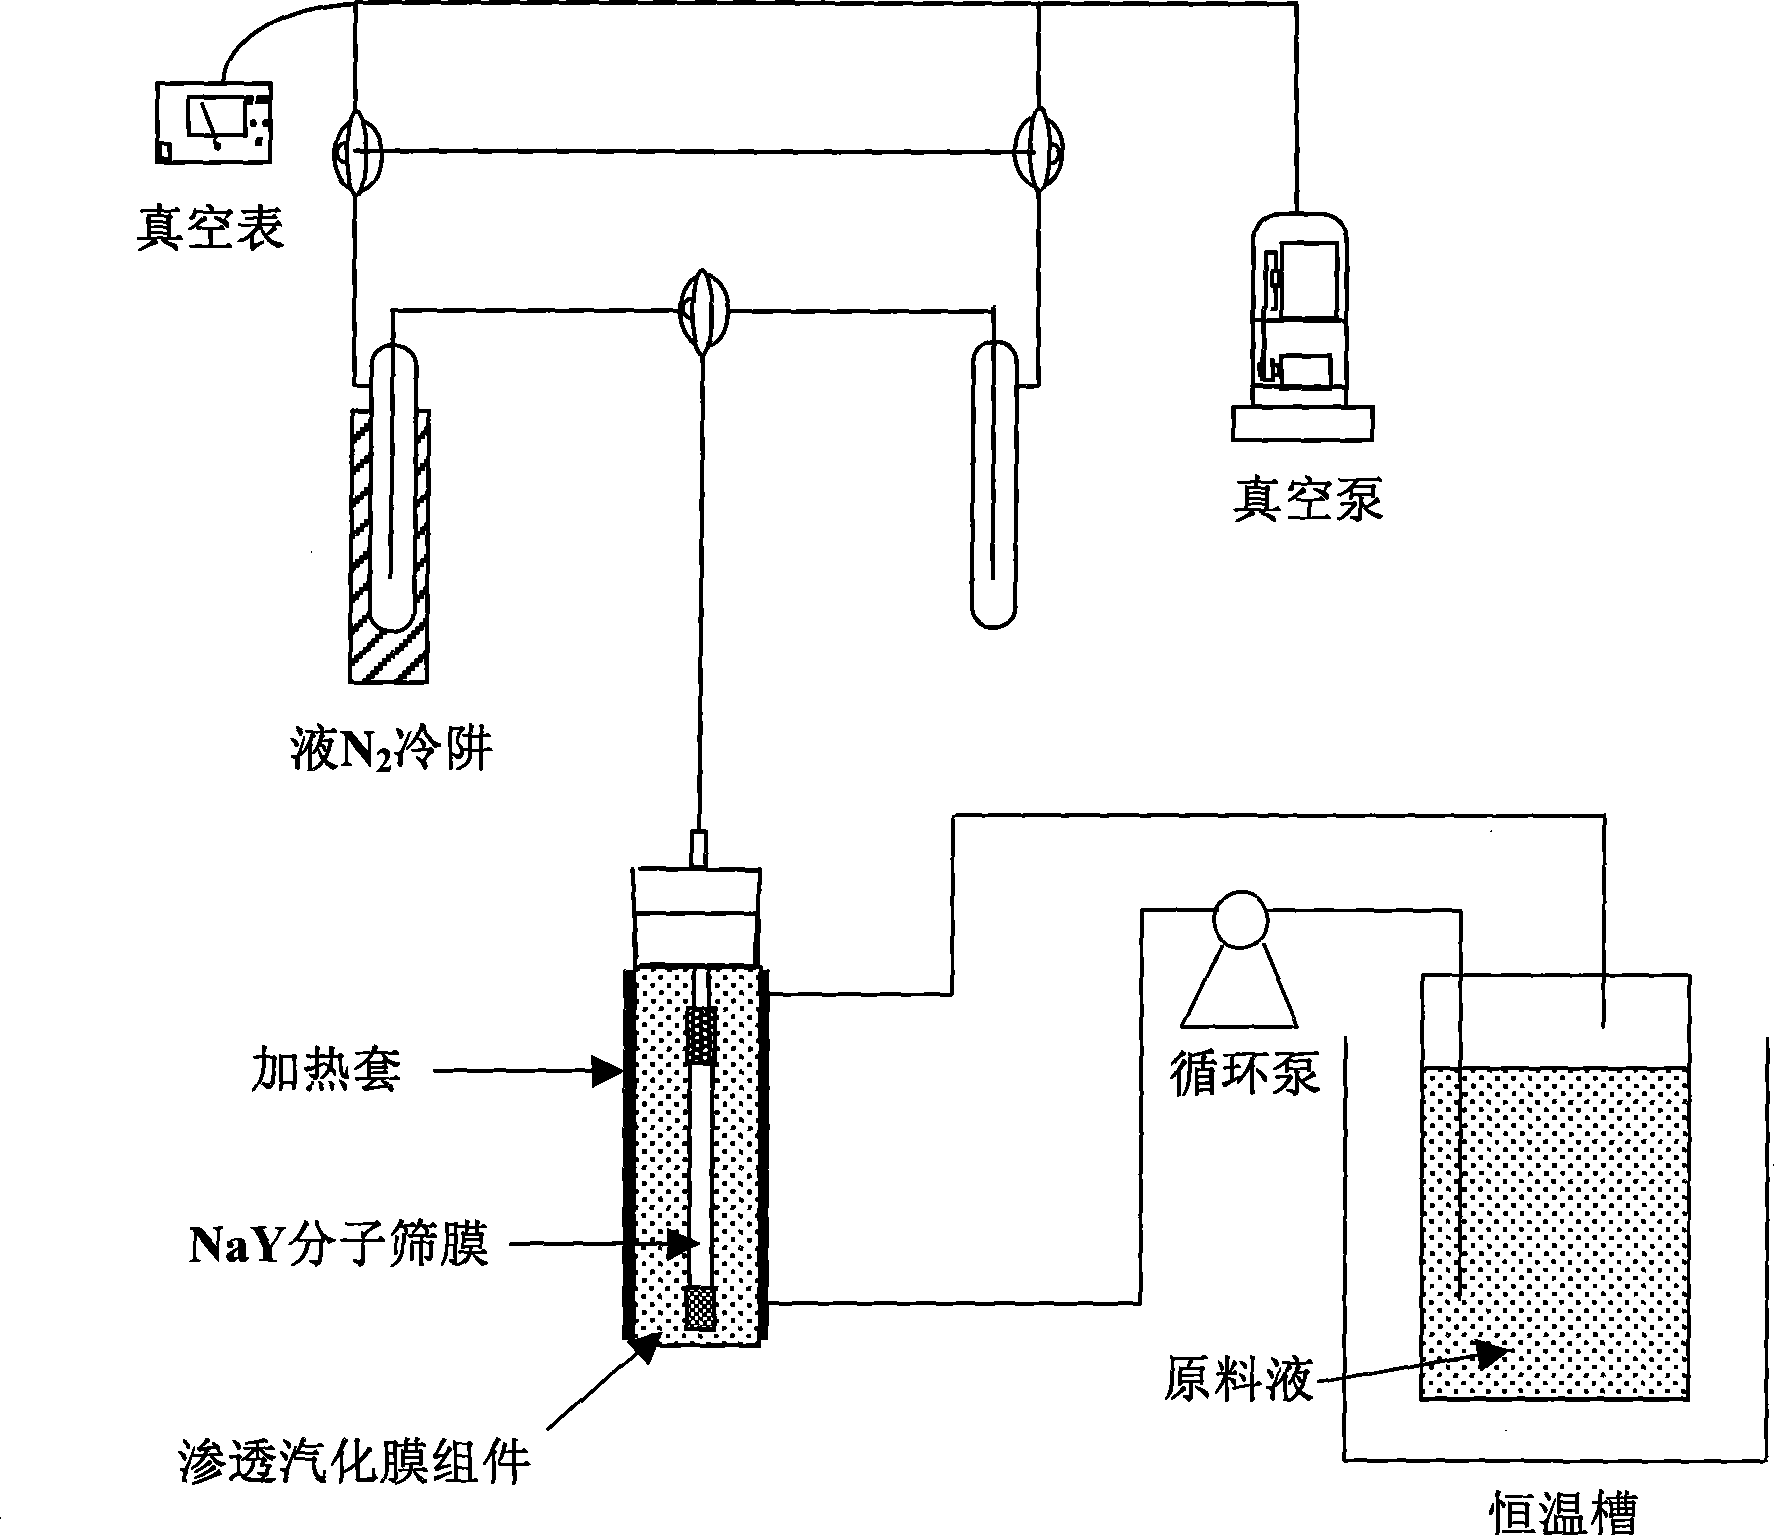 Method for separating methanol and dimethyl carbonate azeotropic mixture